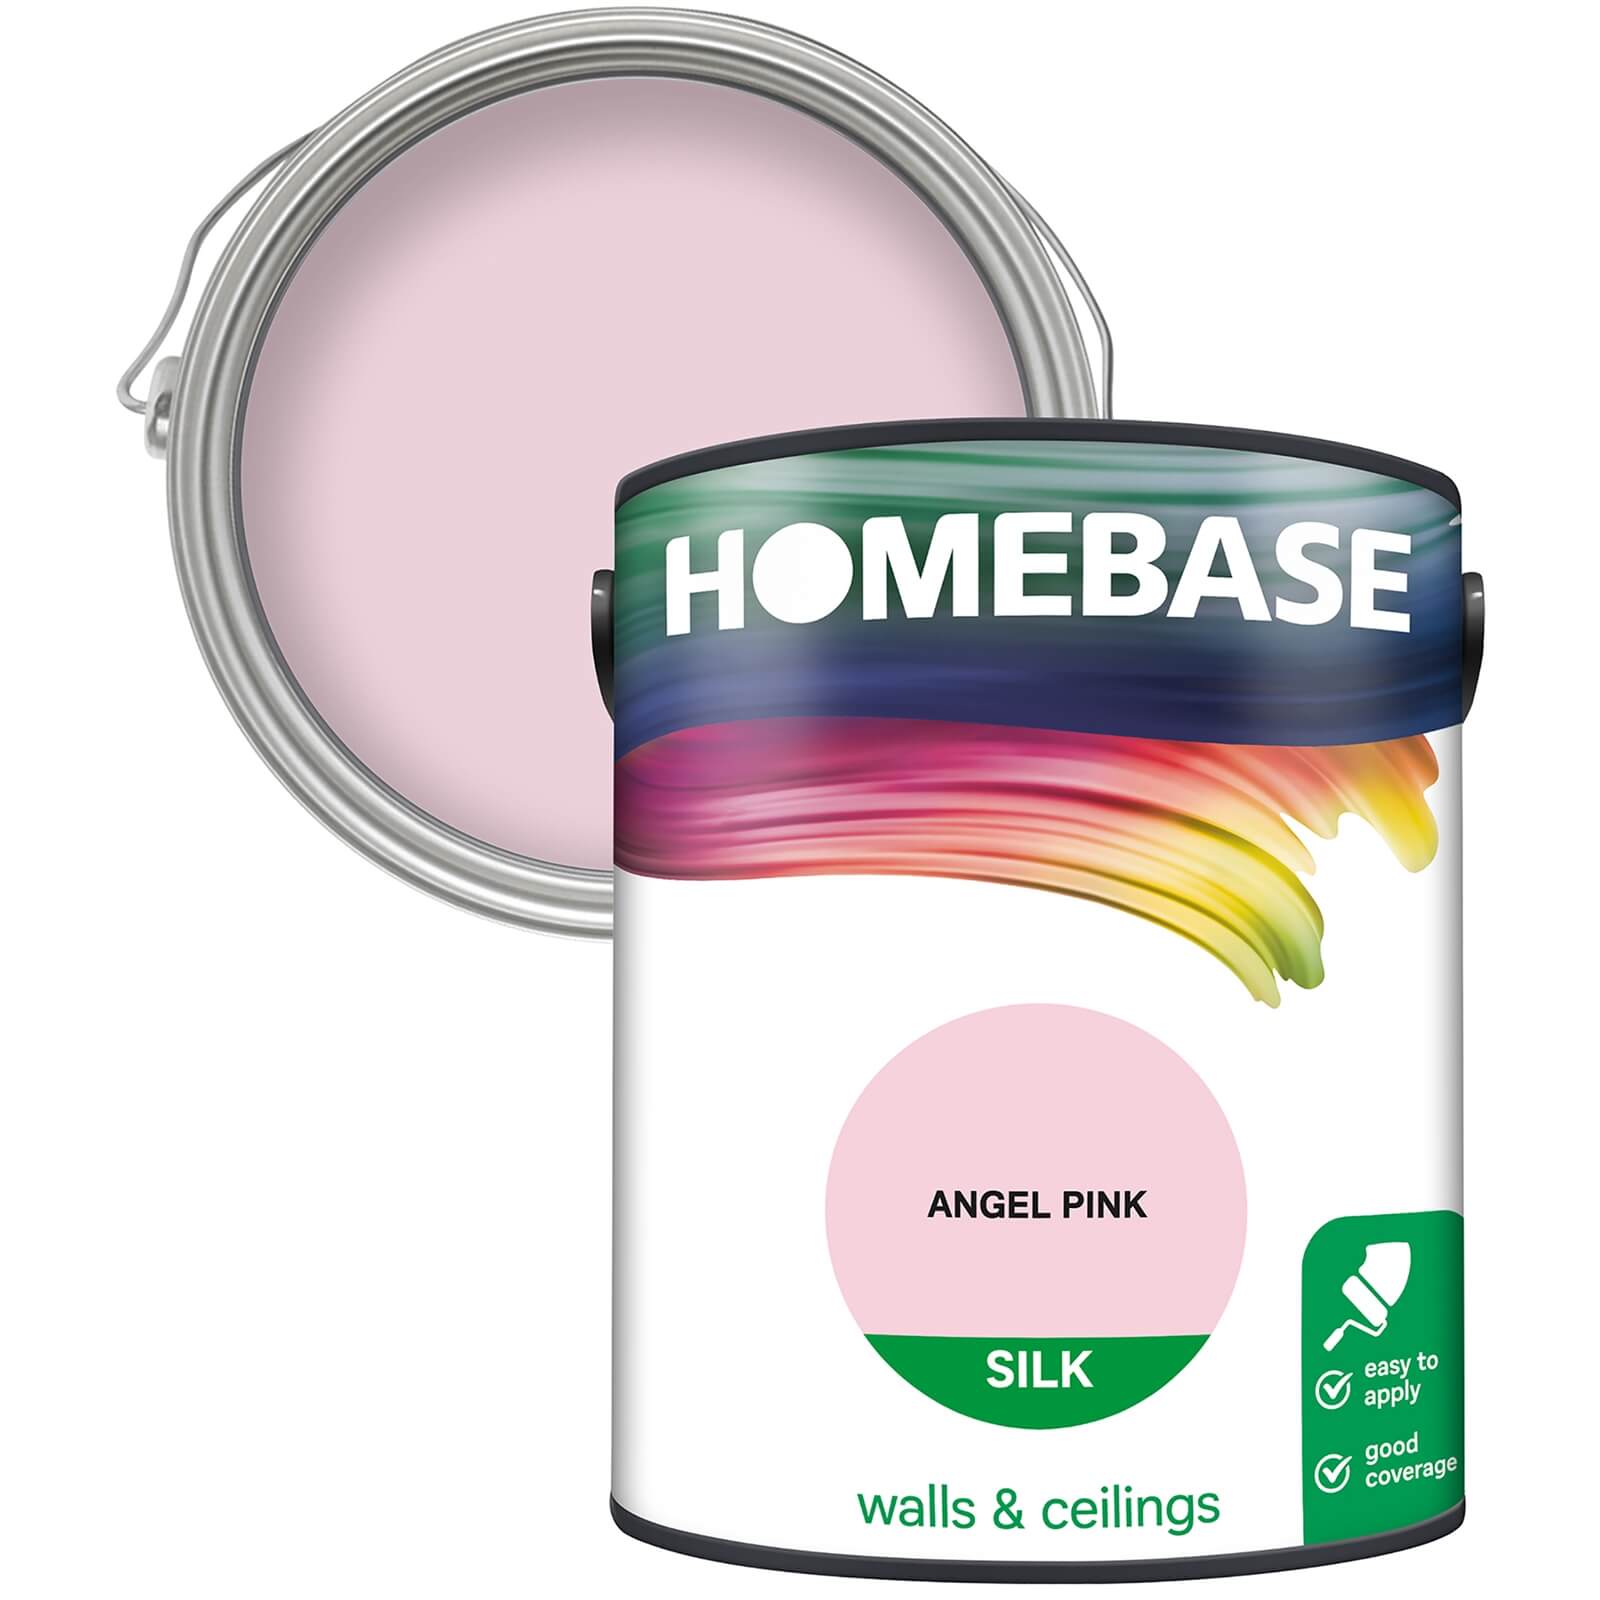 Photo of Homebase Silk Paint - Angel Pink 5l